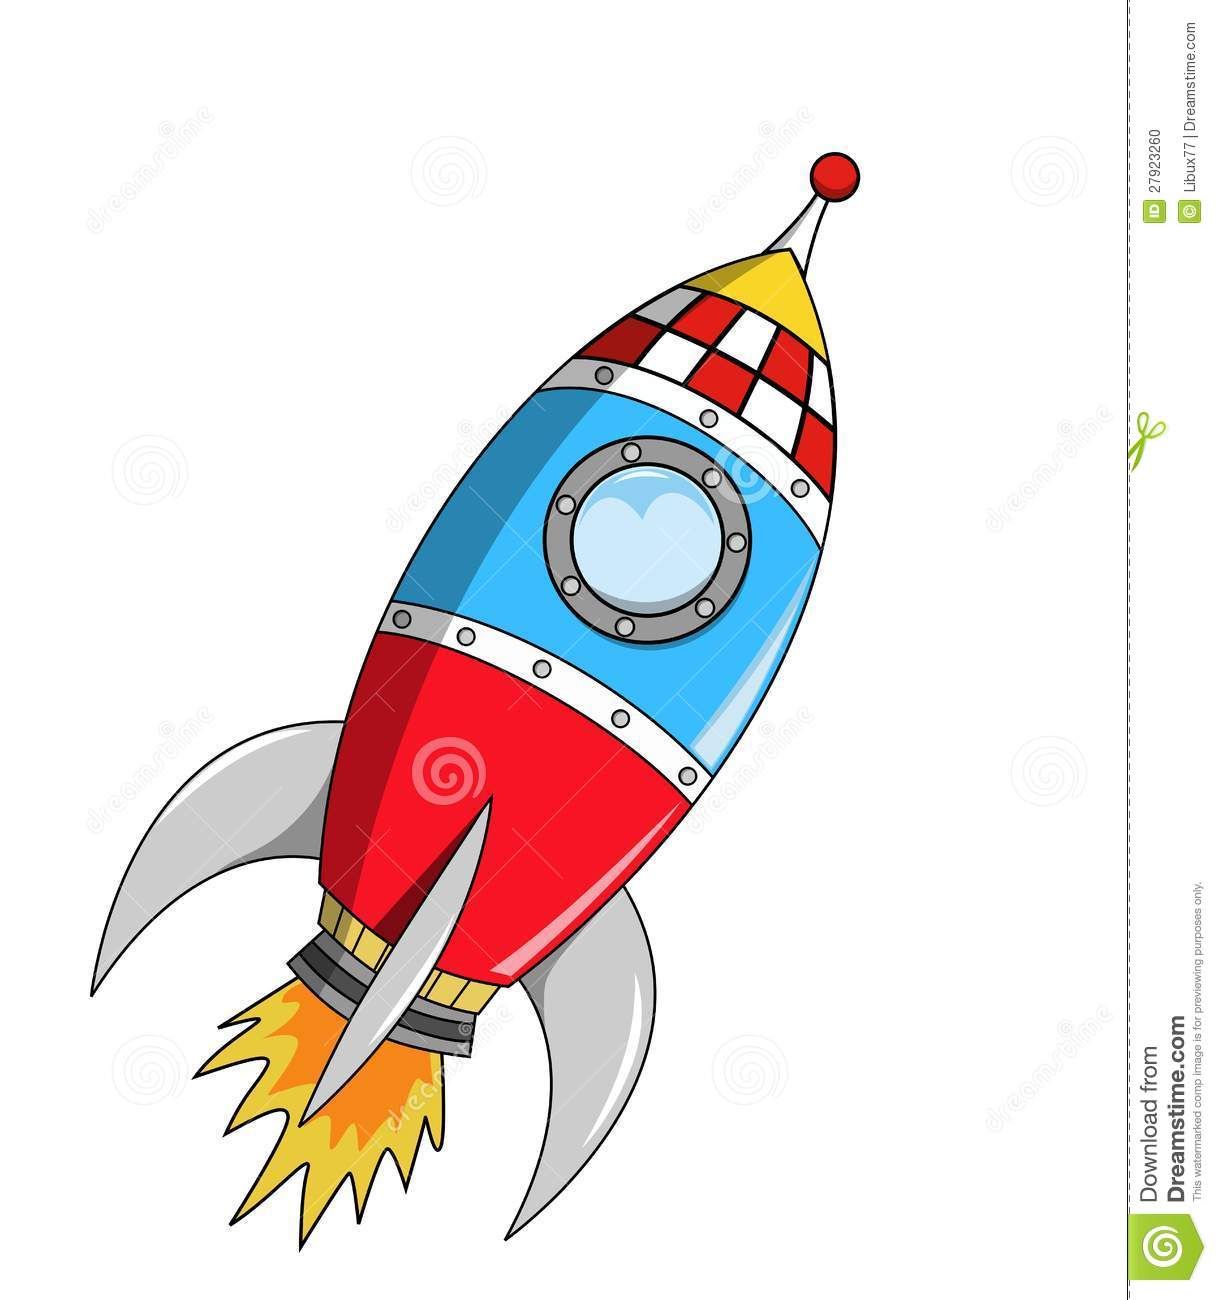 Cartoon rocket on mission. Rocketship clipart space probe